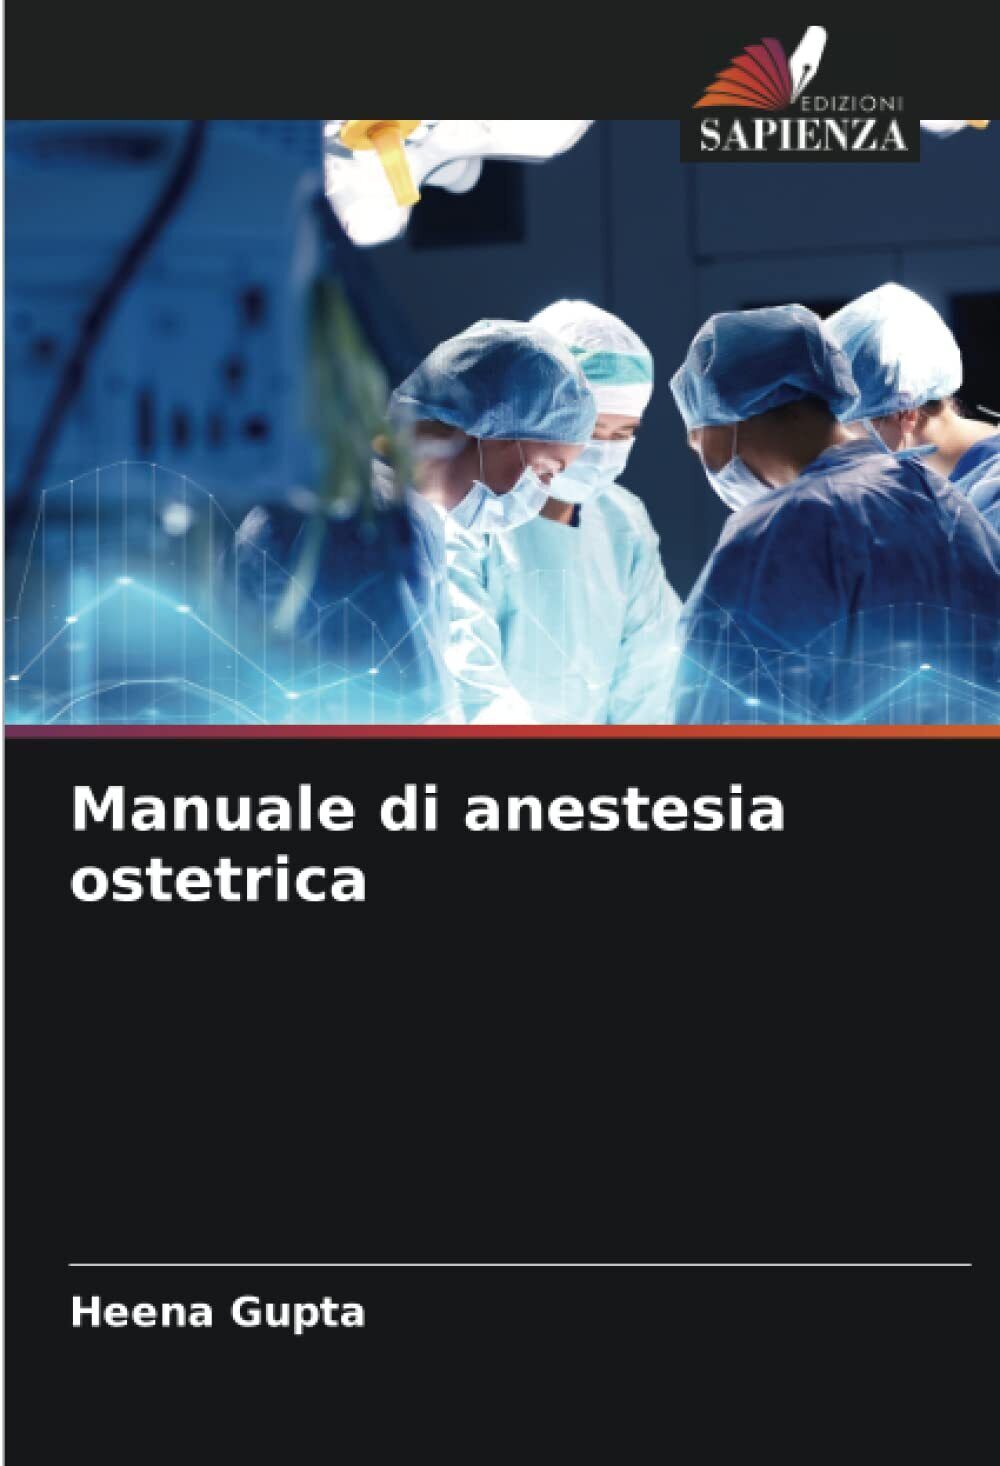 Manuale di anestesia ostetrica - Heena Gupta - Sapienza, 2022